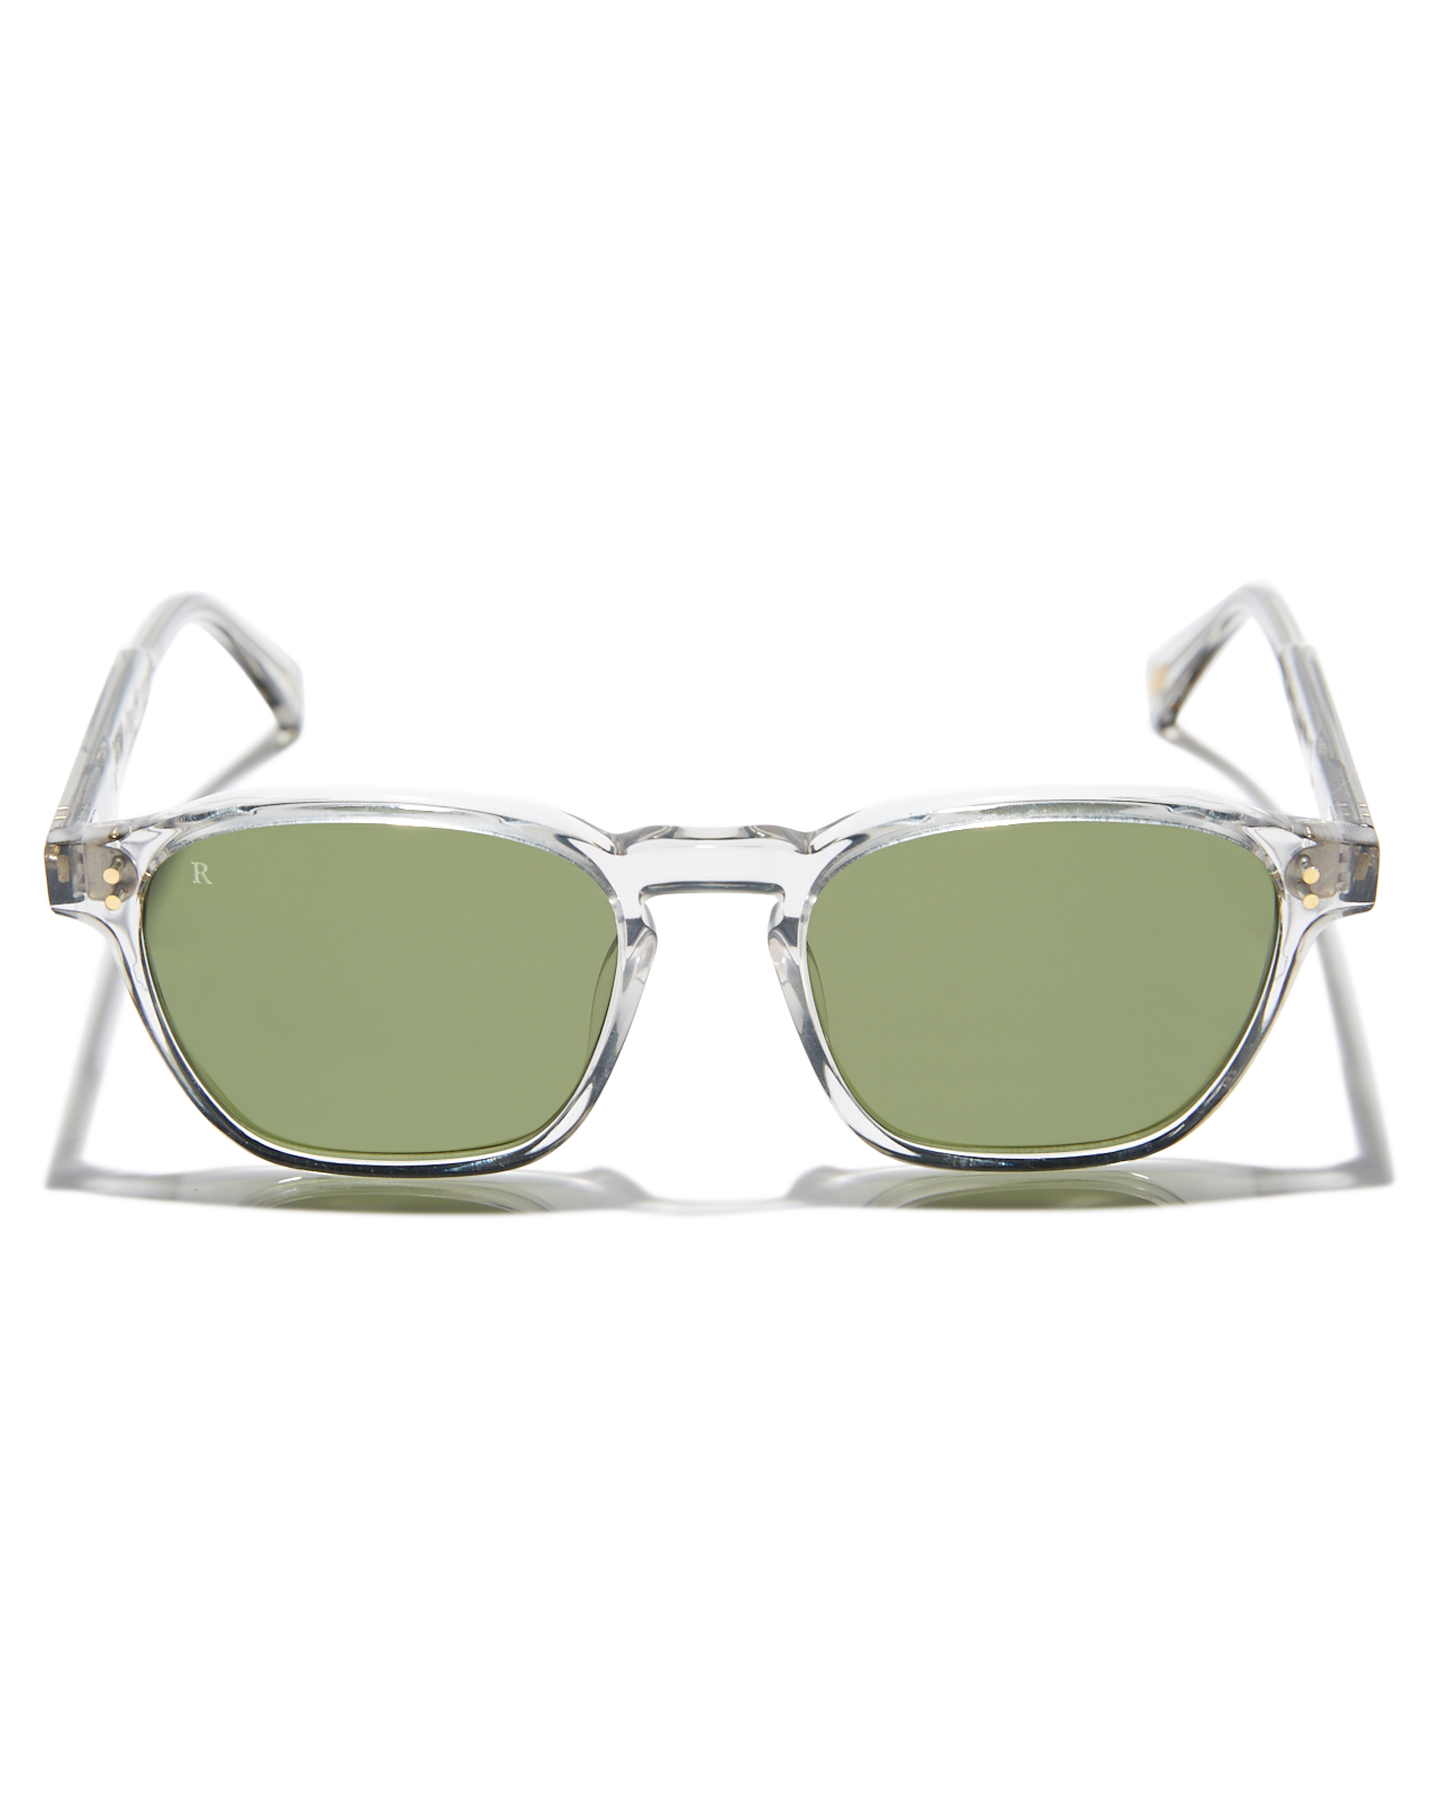 Raen Aren 50 Sunglasses - Fog Crystal Green | SurfStitch